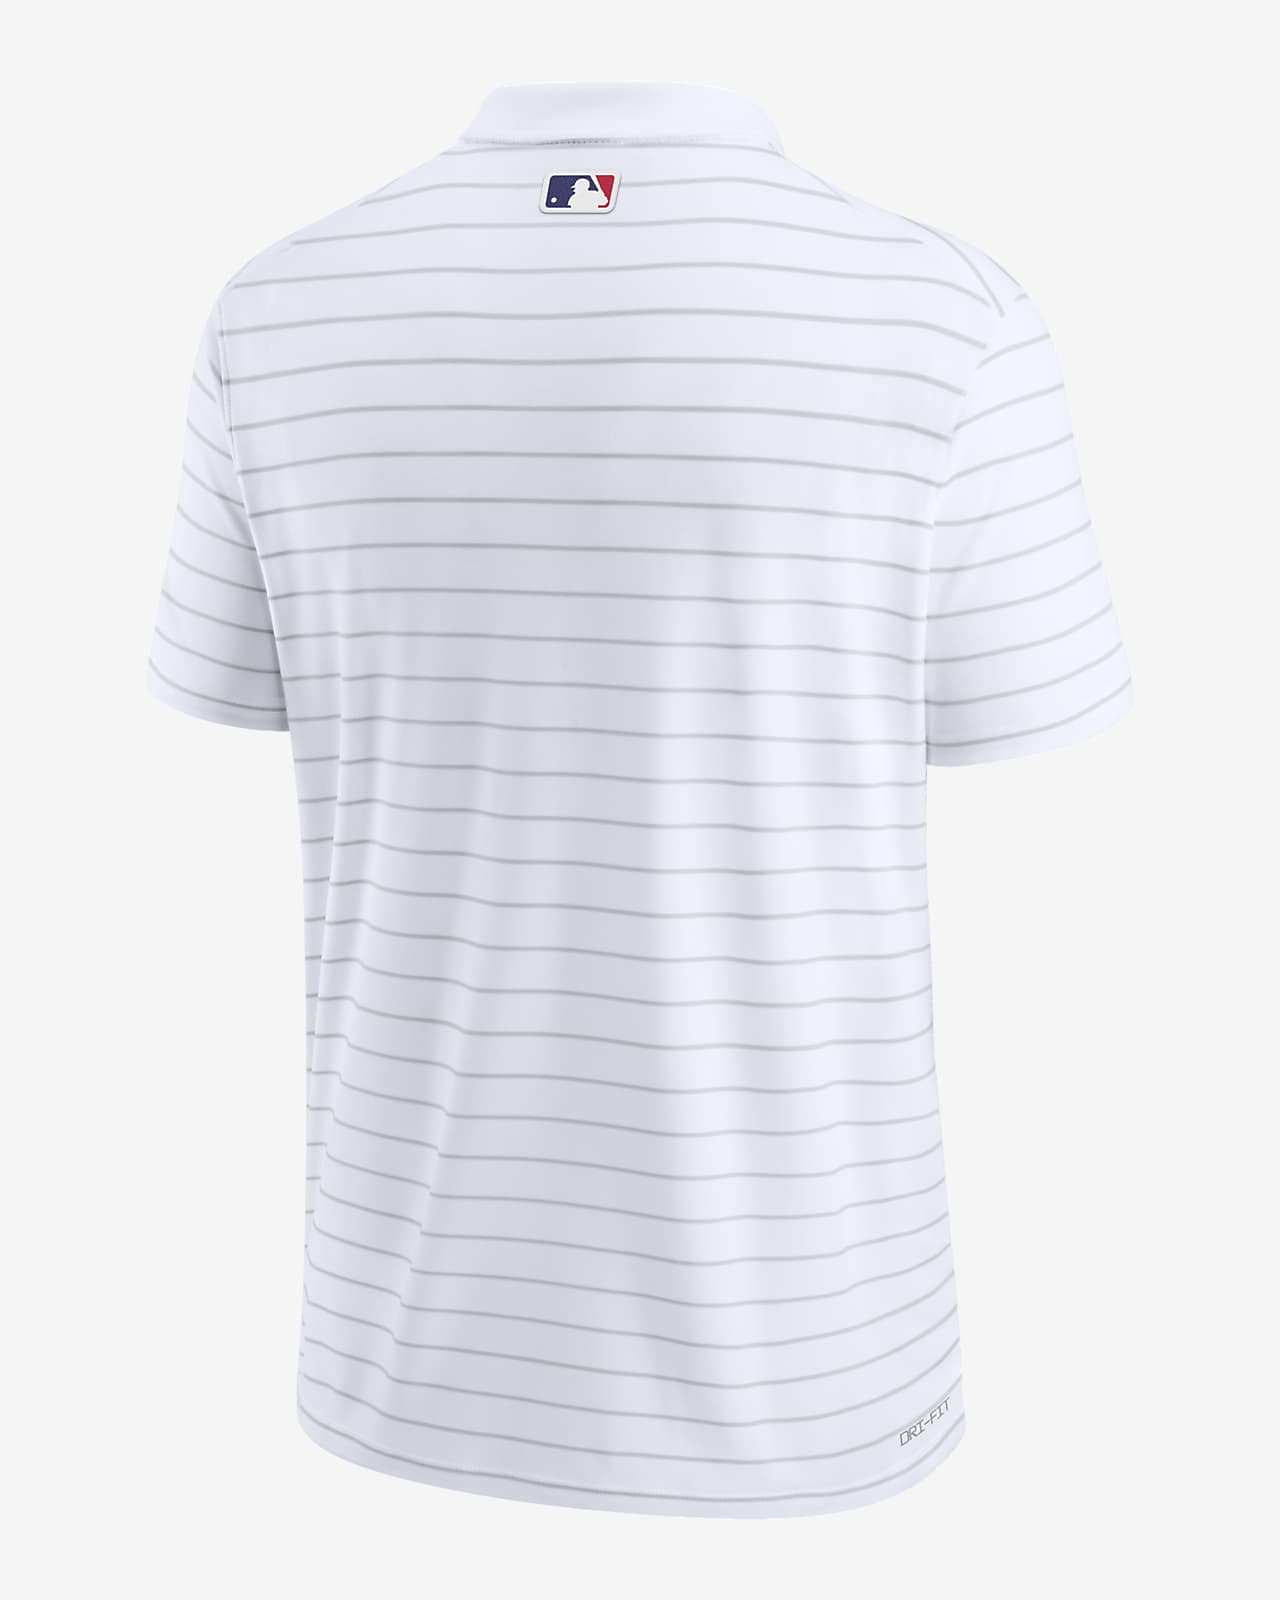 Nike Dri-FIT Early Work (MLB Texas Rangers) Men's T-Shirt